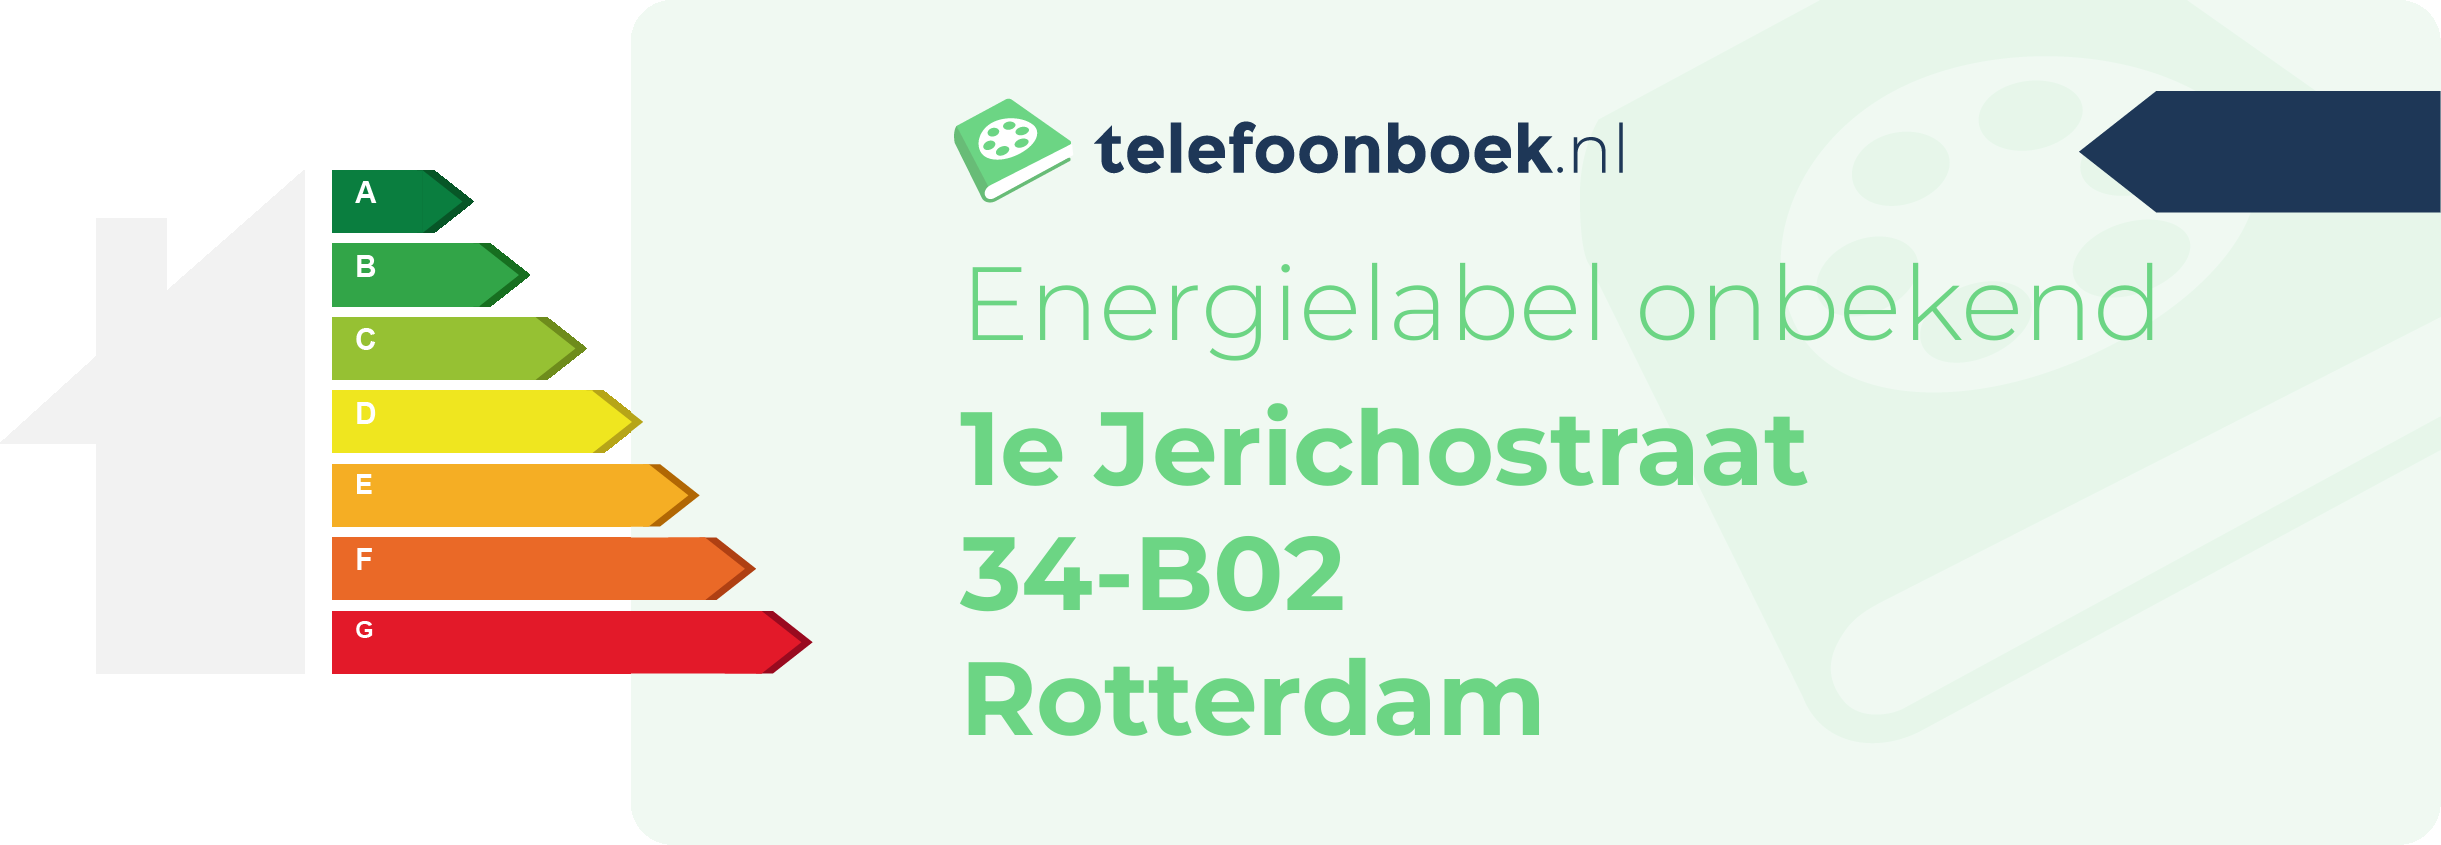 Energielabel 1e Jerichostraat 34-B02 Rotterdam